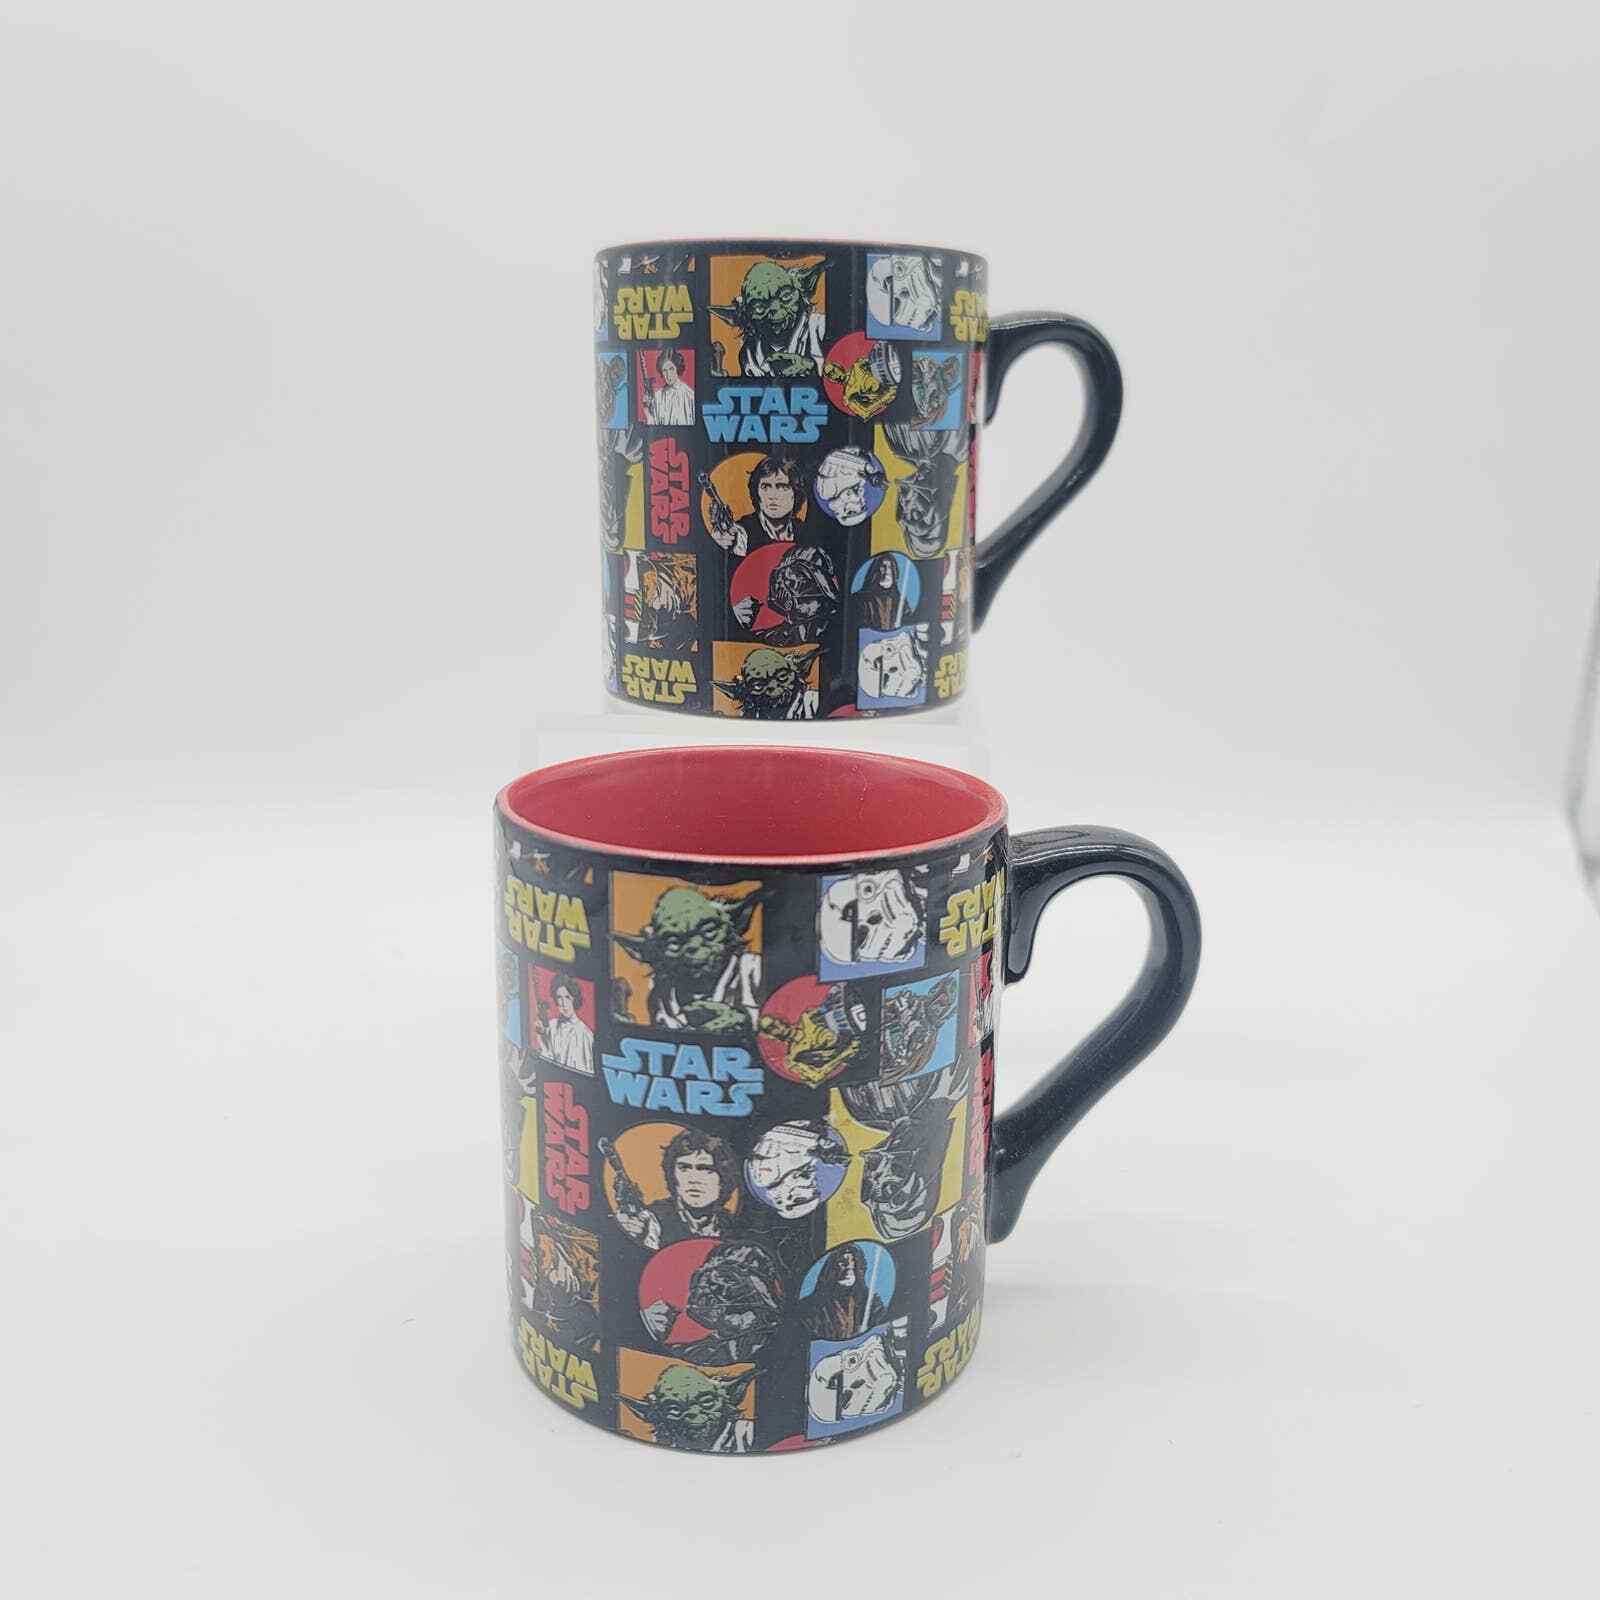 Star Wars set of two coffee mugs